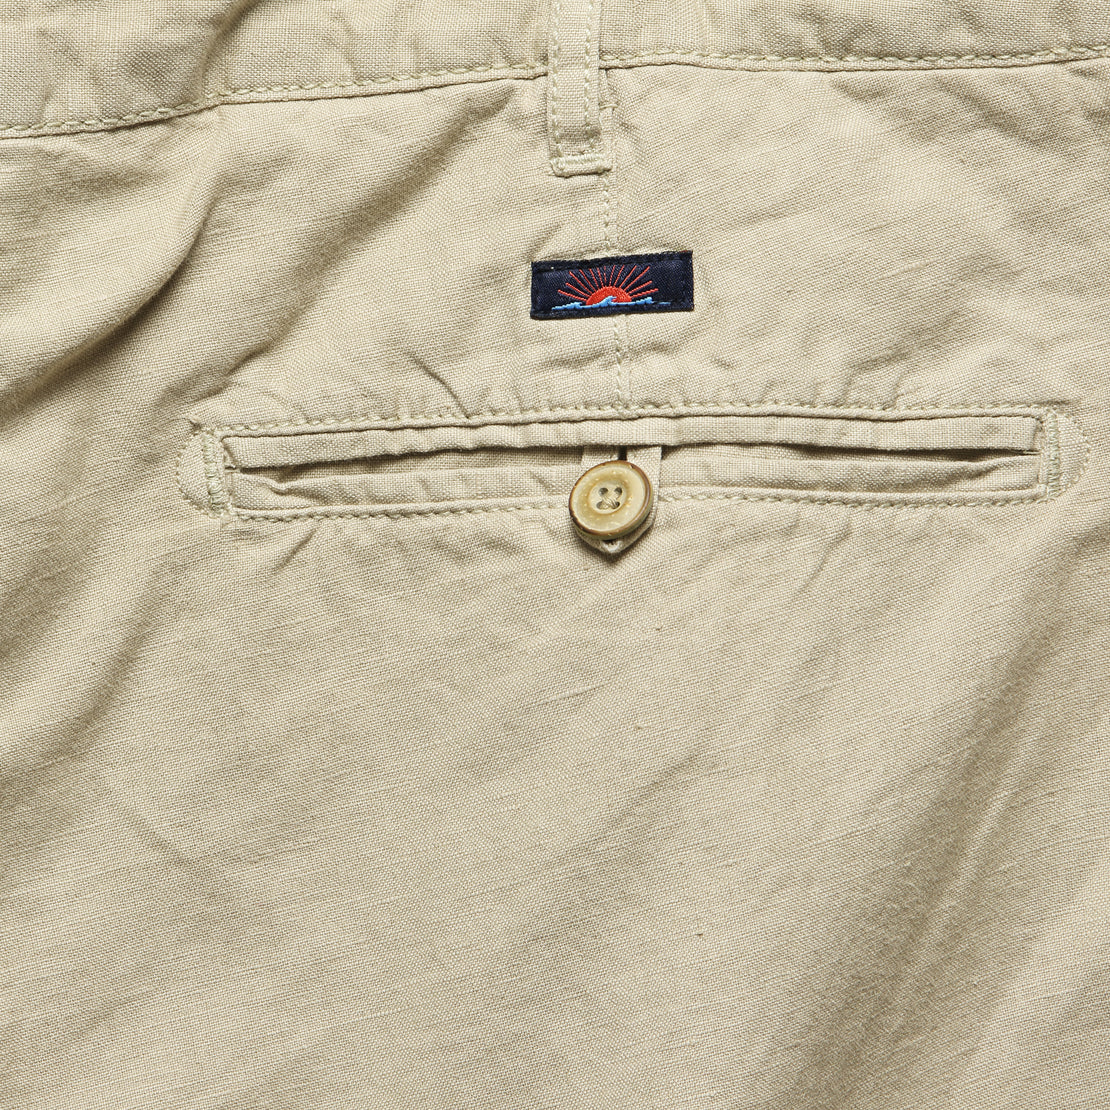 Malibu Short - Khaki - Faherty - STAG Provisions - Shorts - Solid